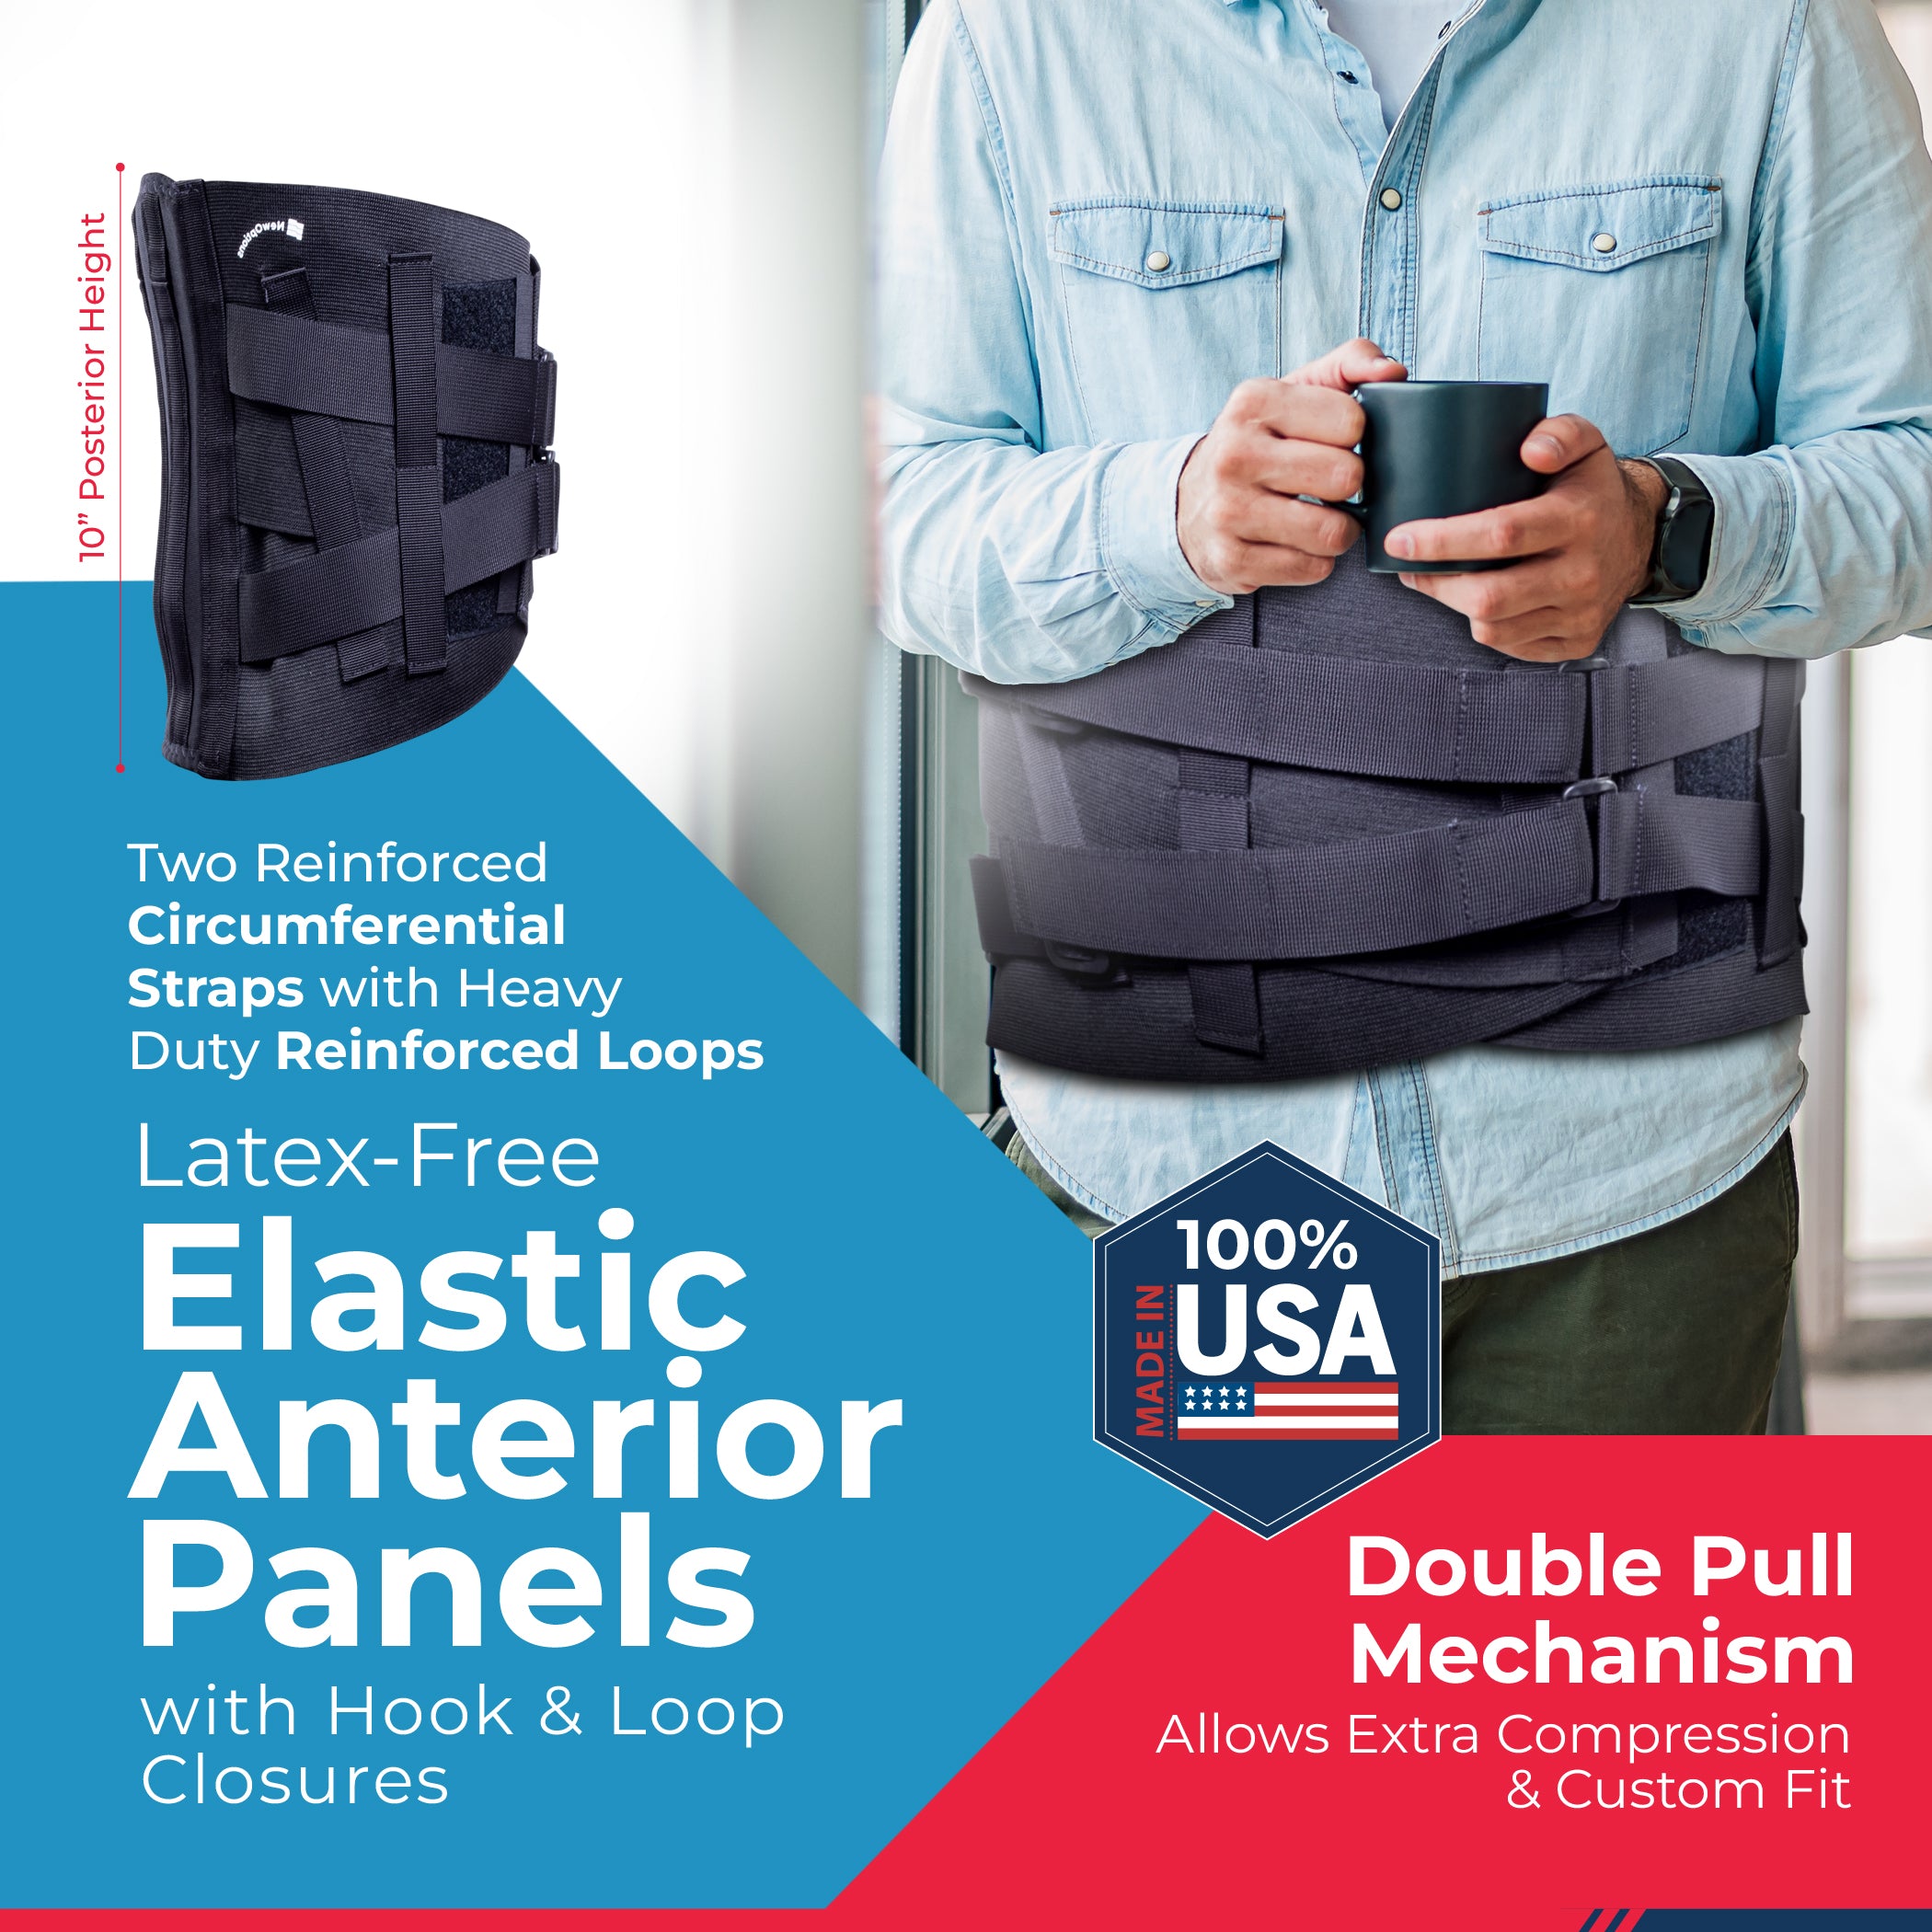 L1: soporte lumbar elástico con bolsillo de neopreno – New Options